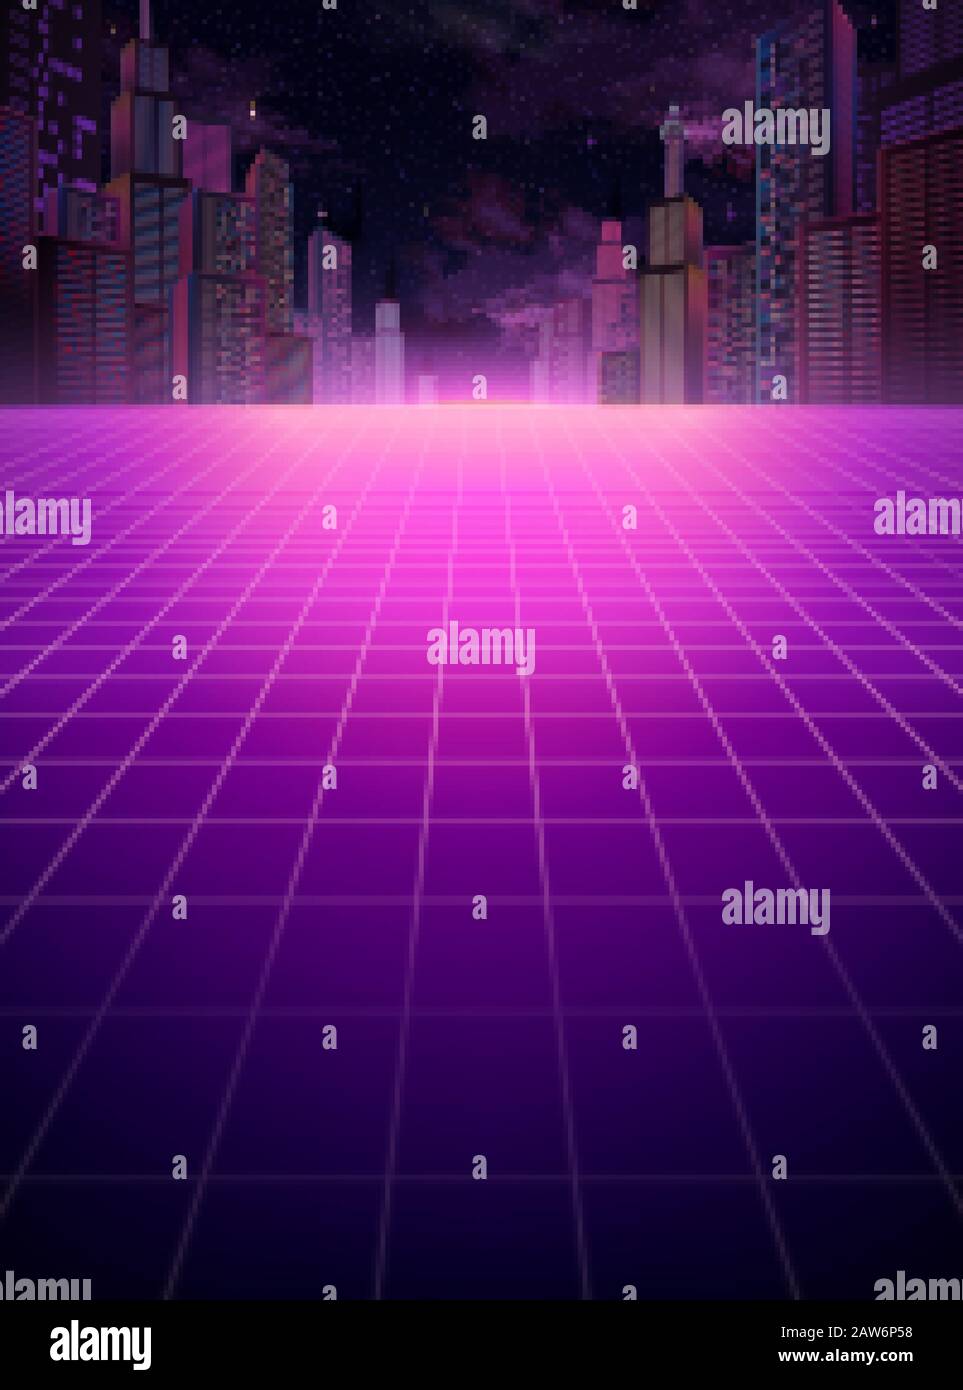 Cyberpunk urban night scene with grid floor copyspace in purple tone Stock Vector